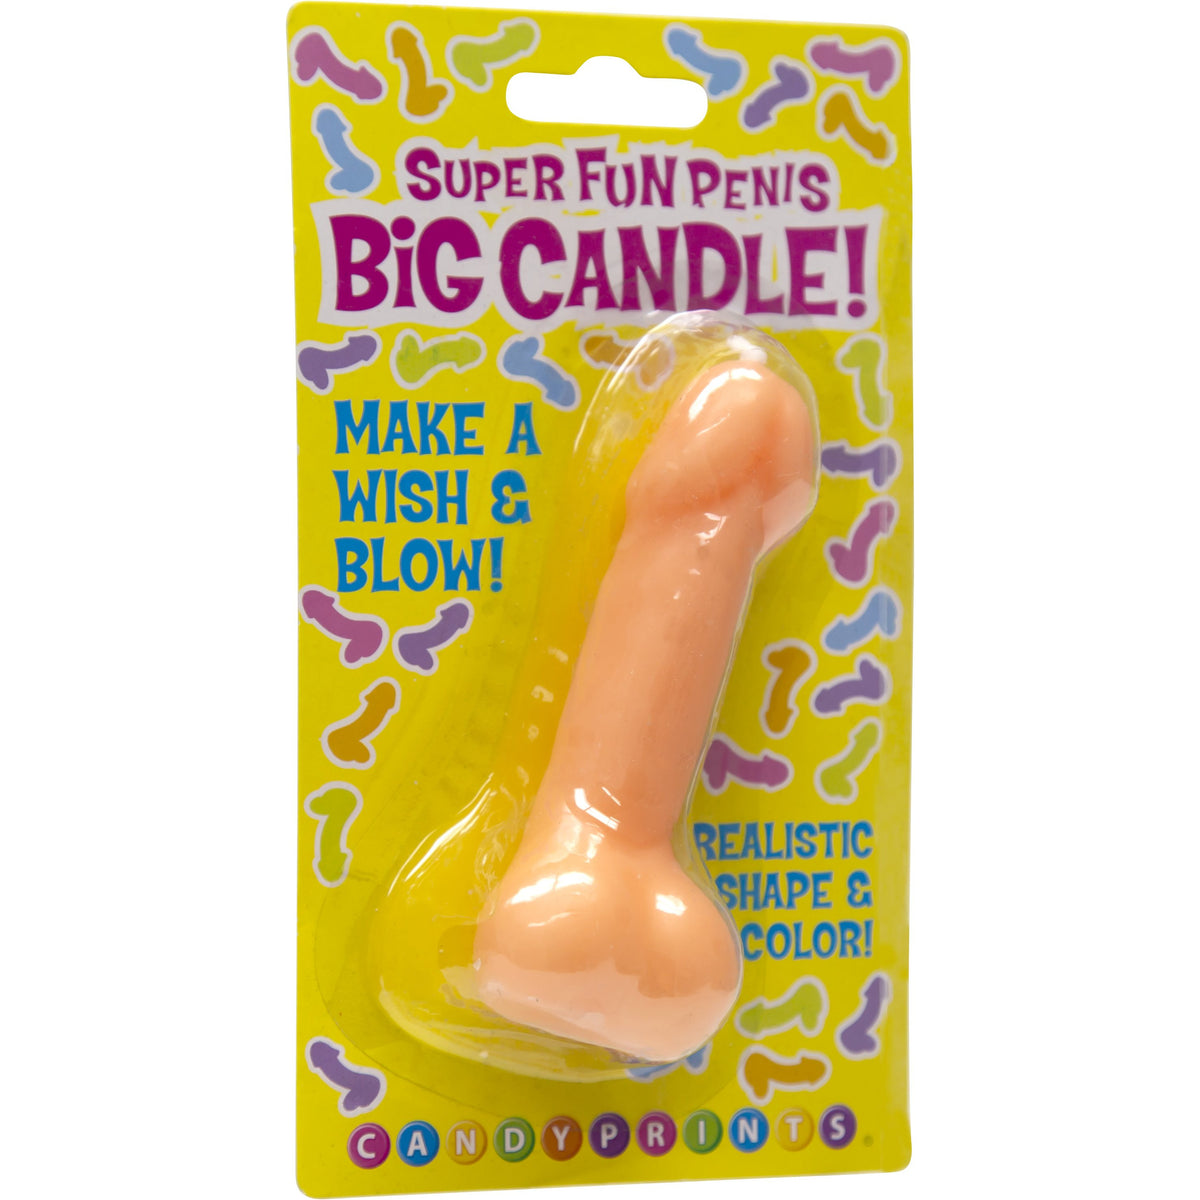 Candyprints Big Penis Candle